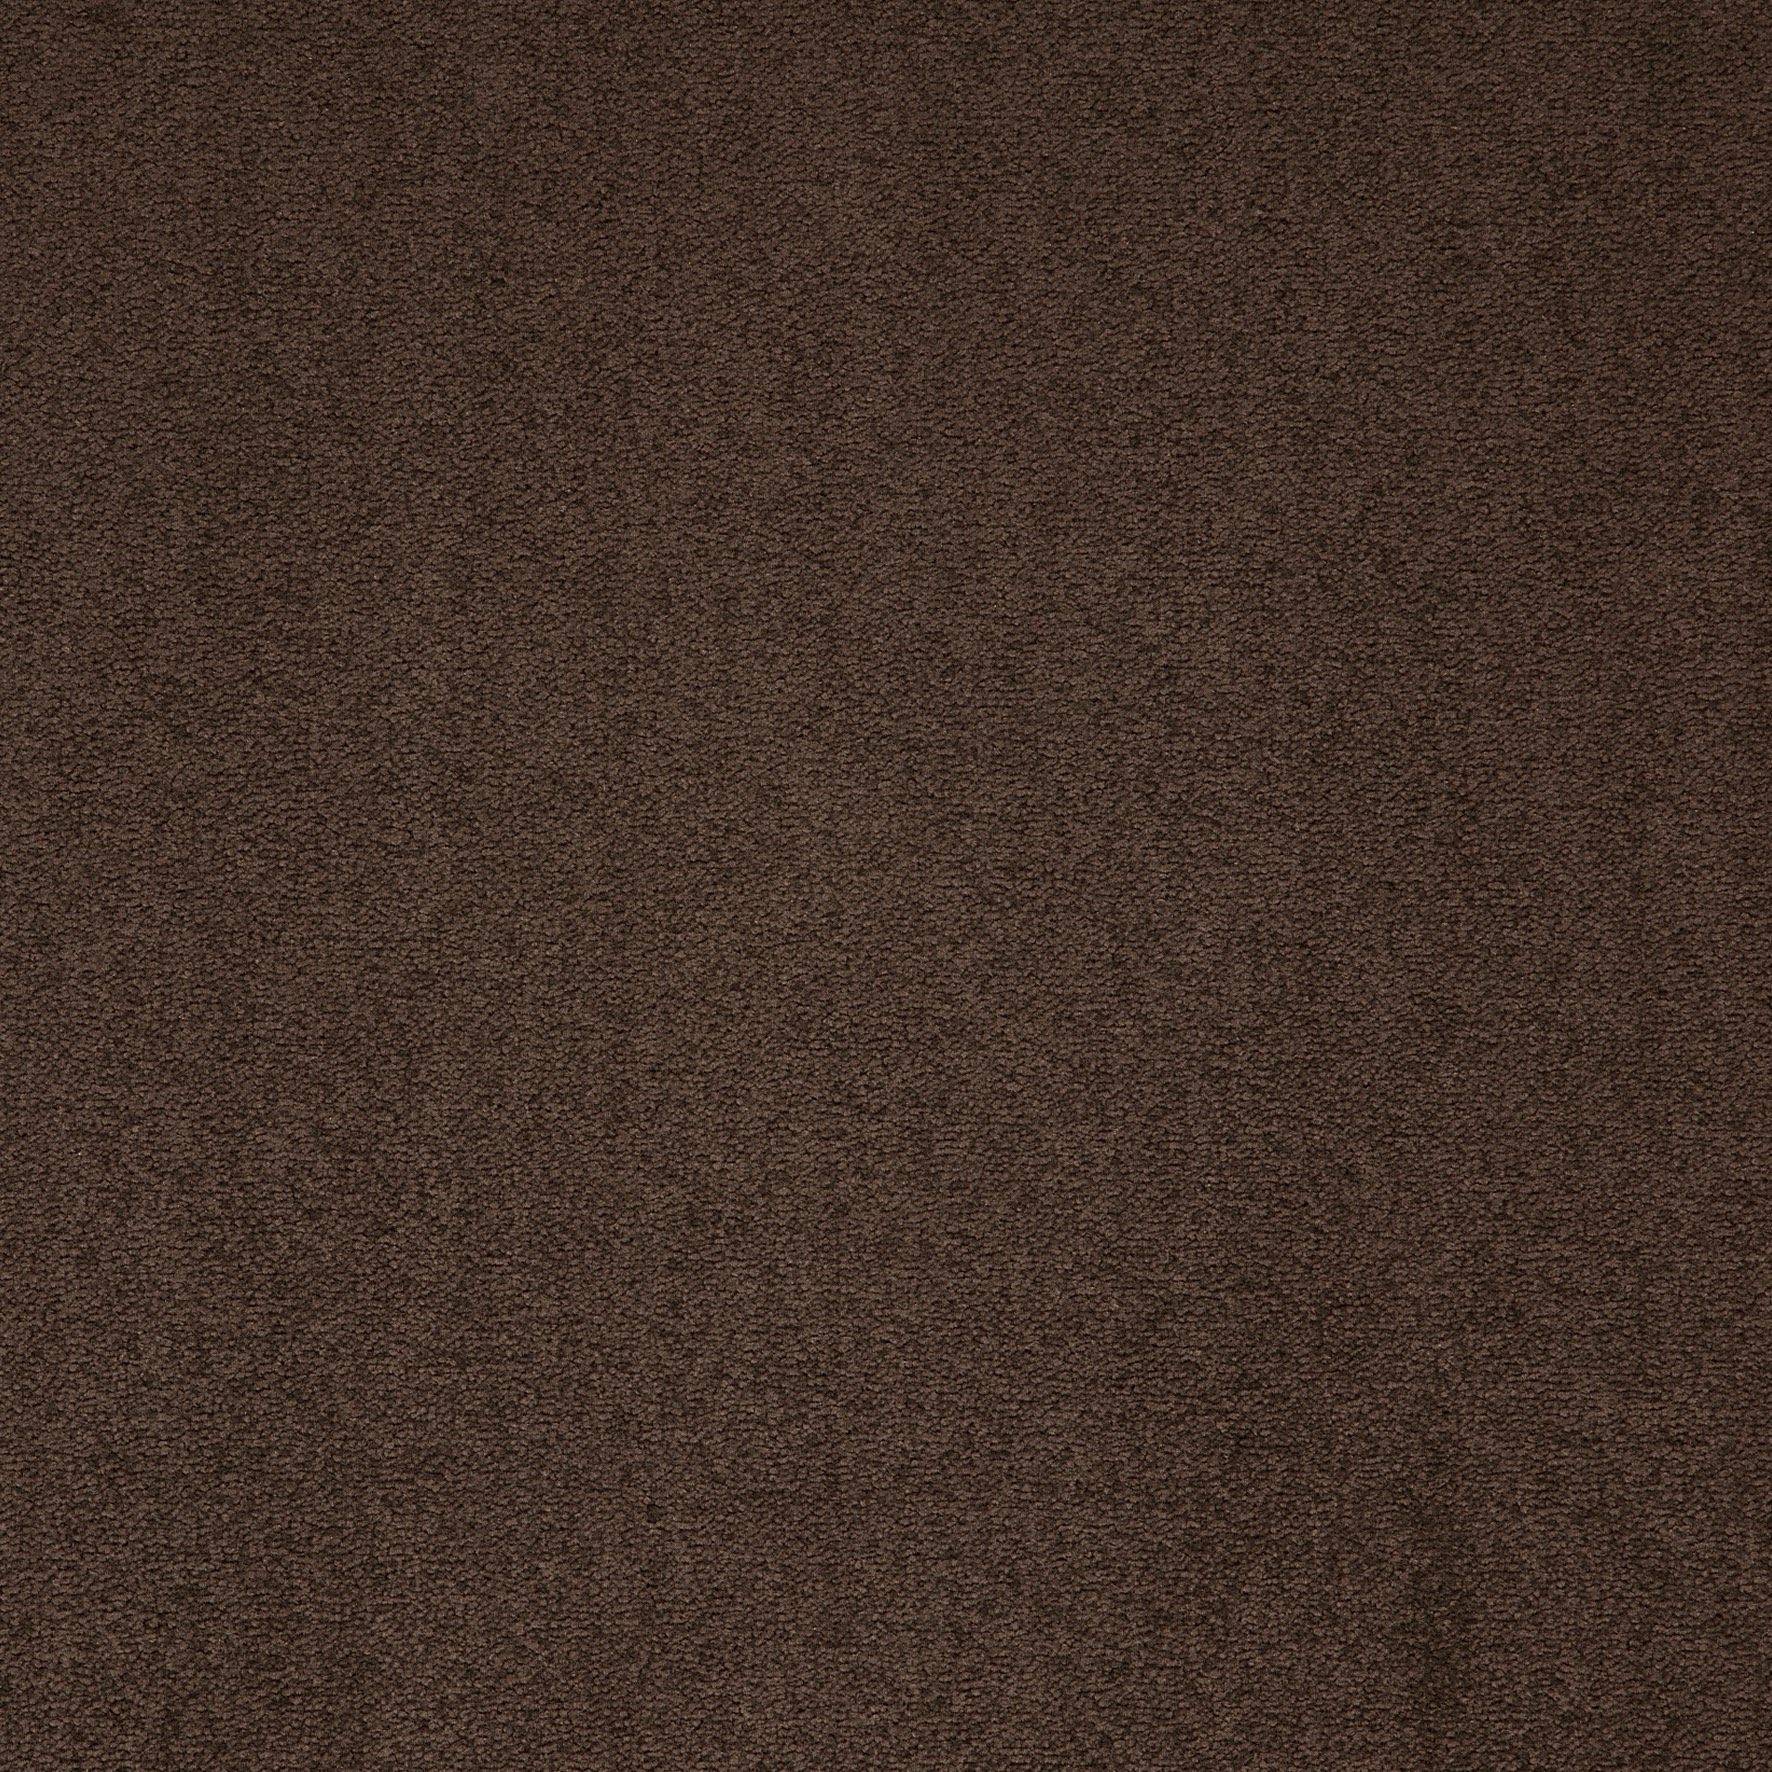 Paragon Maestro Carpet Tile Cocoa Blush